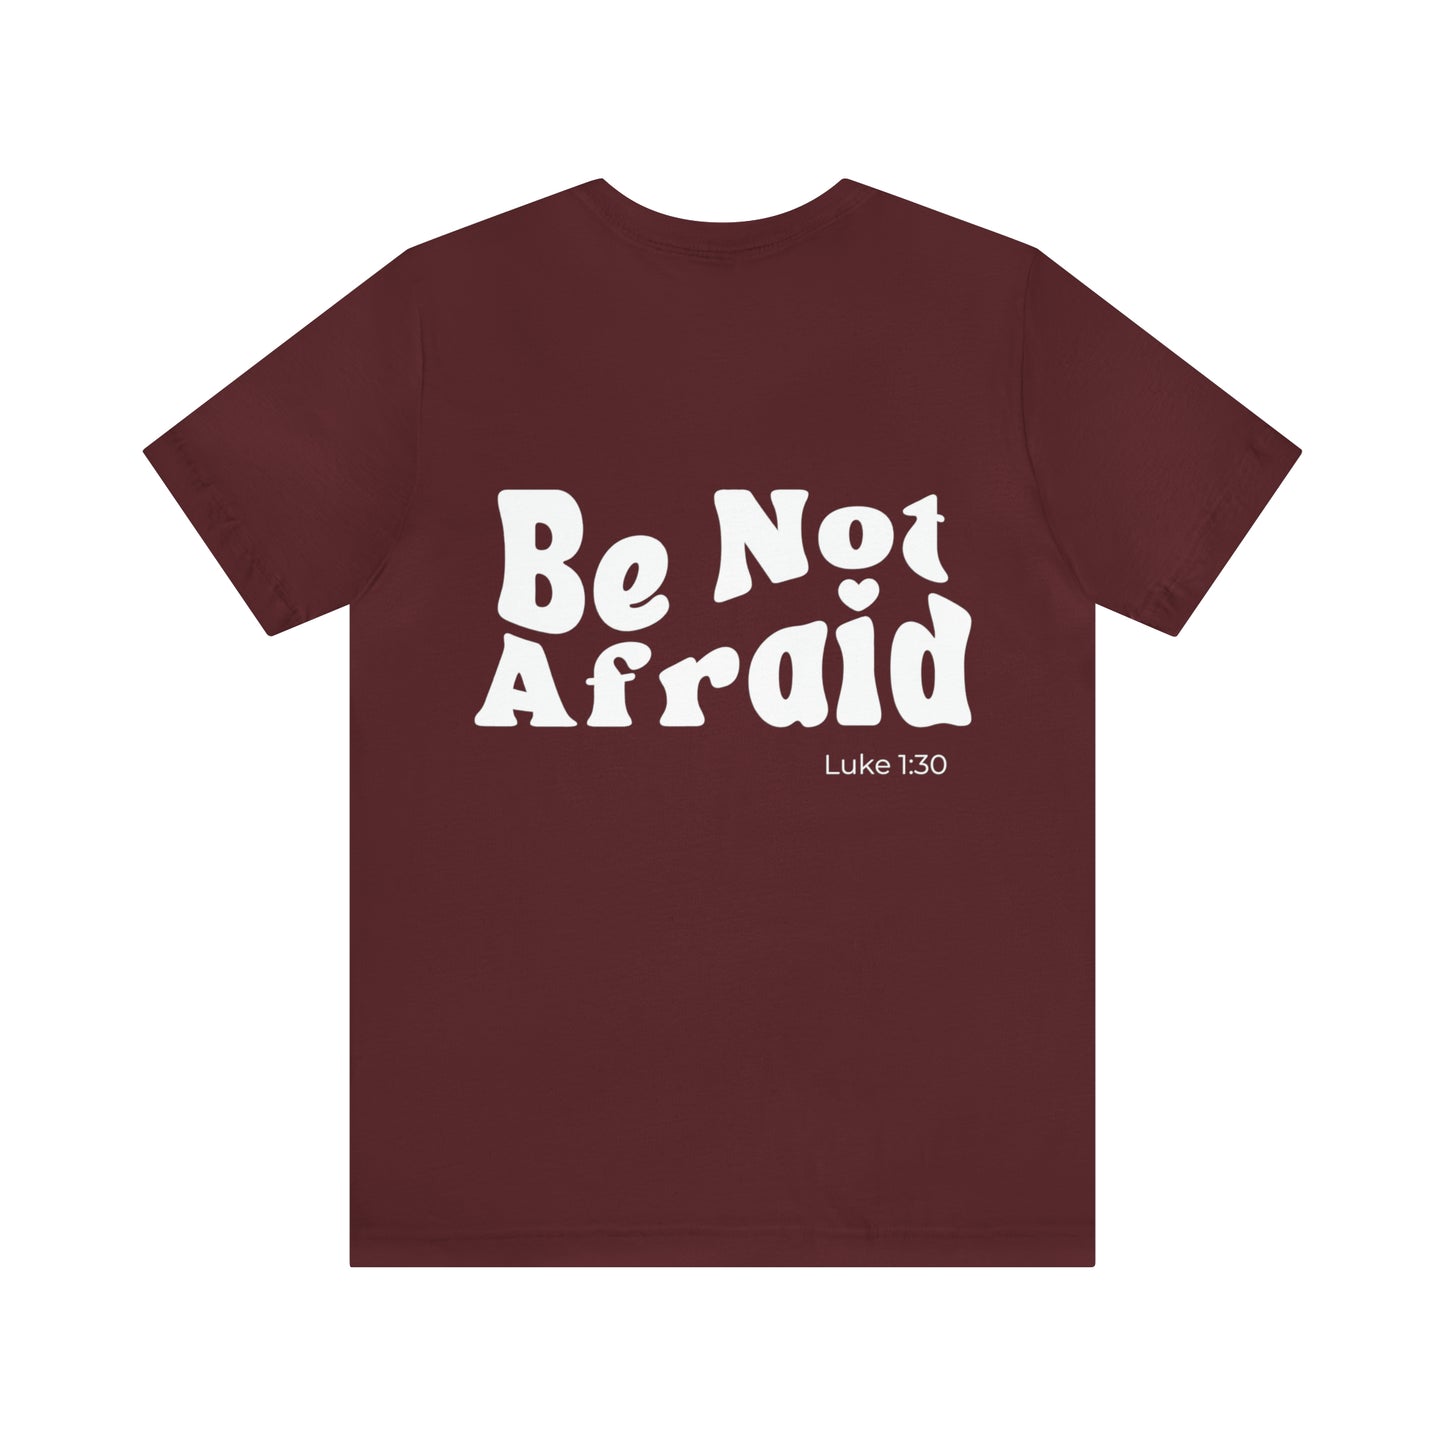 Be Not Afraid Tee